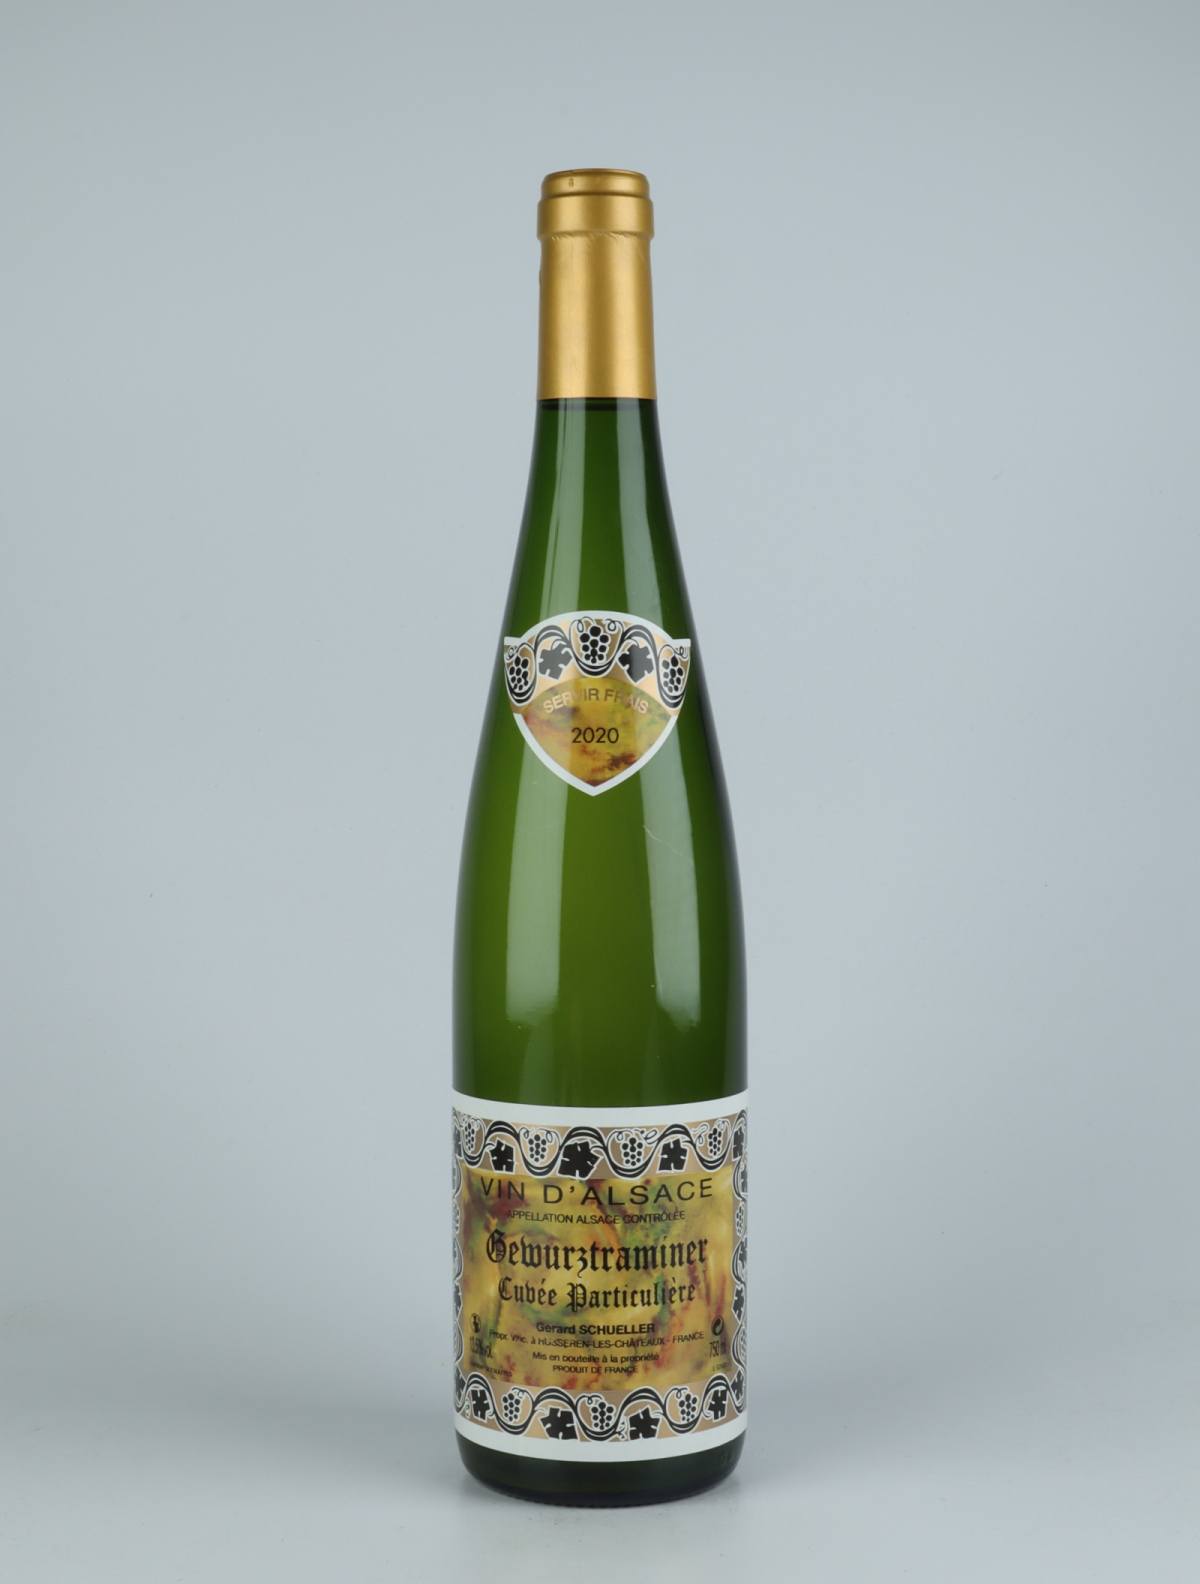 A bottle 2020 Gewürztraminer Cuvée Particulière White wine from Gérard Schueller, Alsace in France